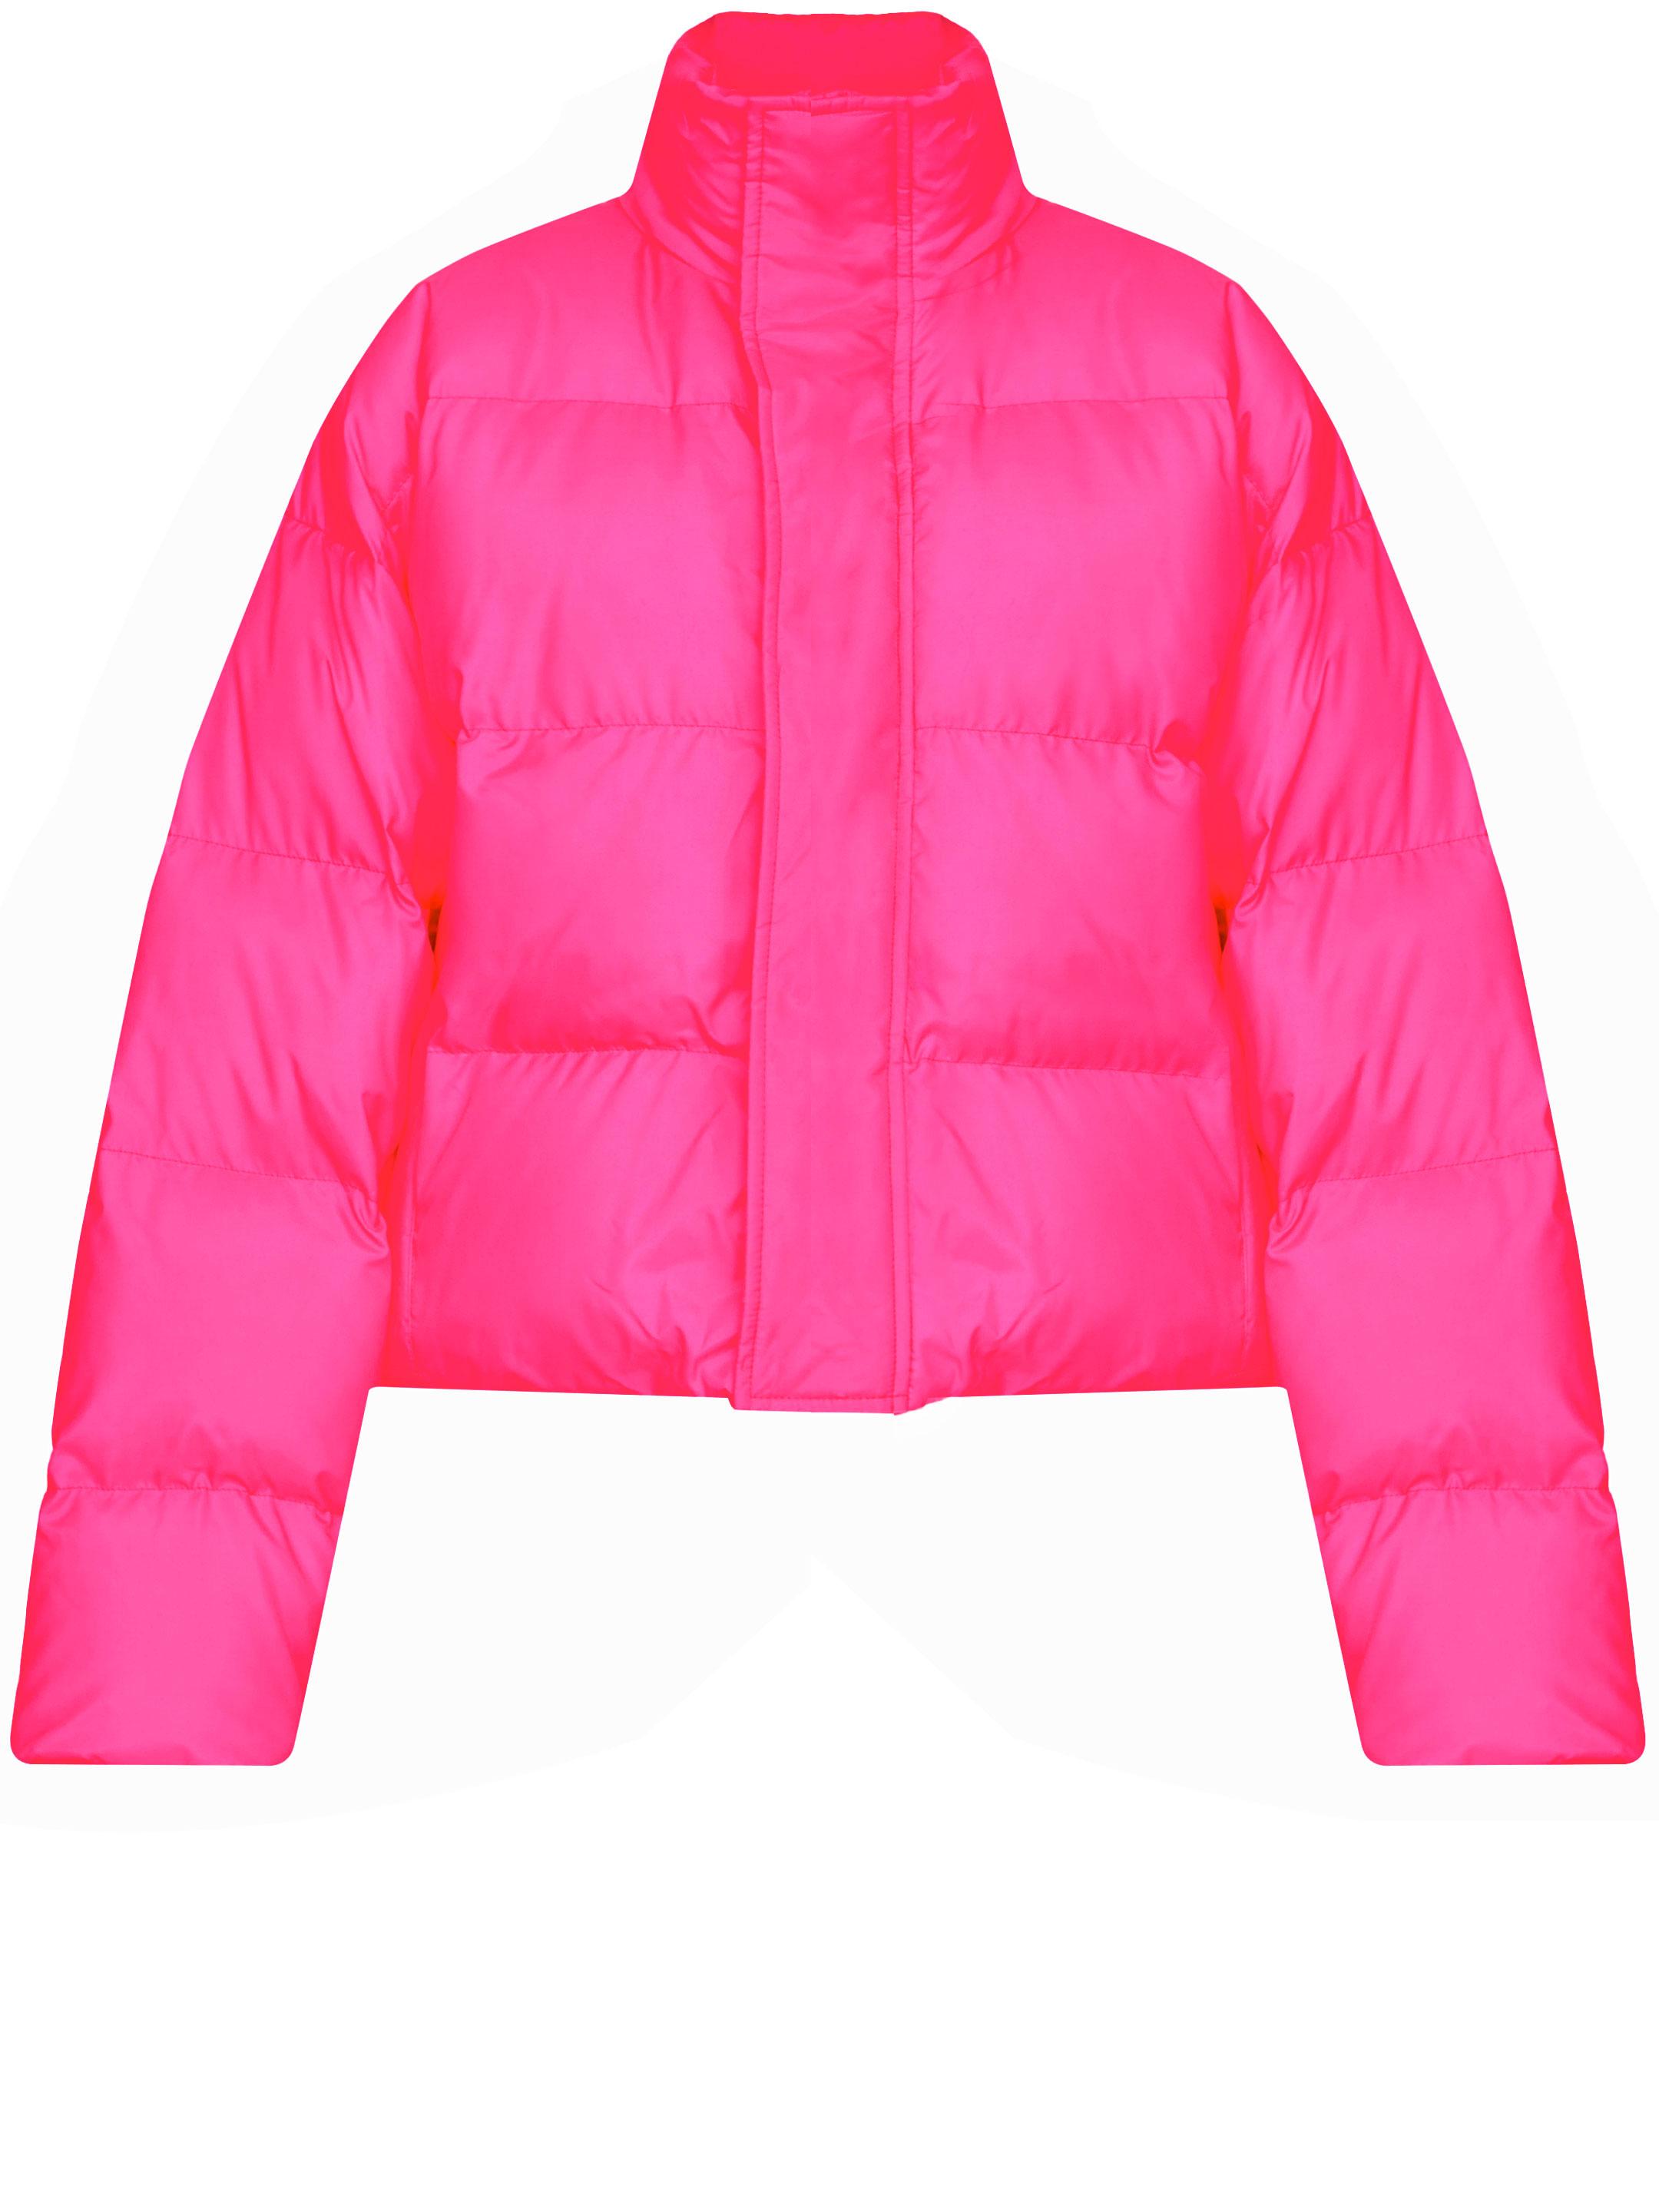 Balenciaga Neon Nylon Puffer Jacket in Pink | Lyst